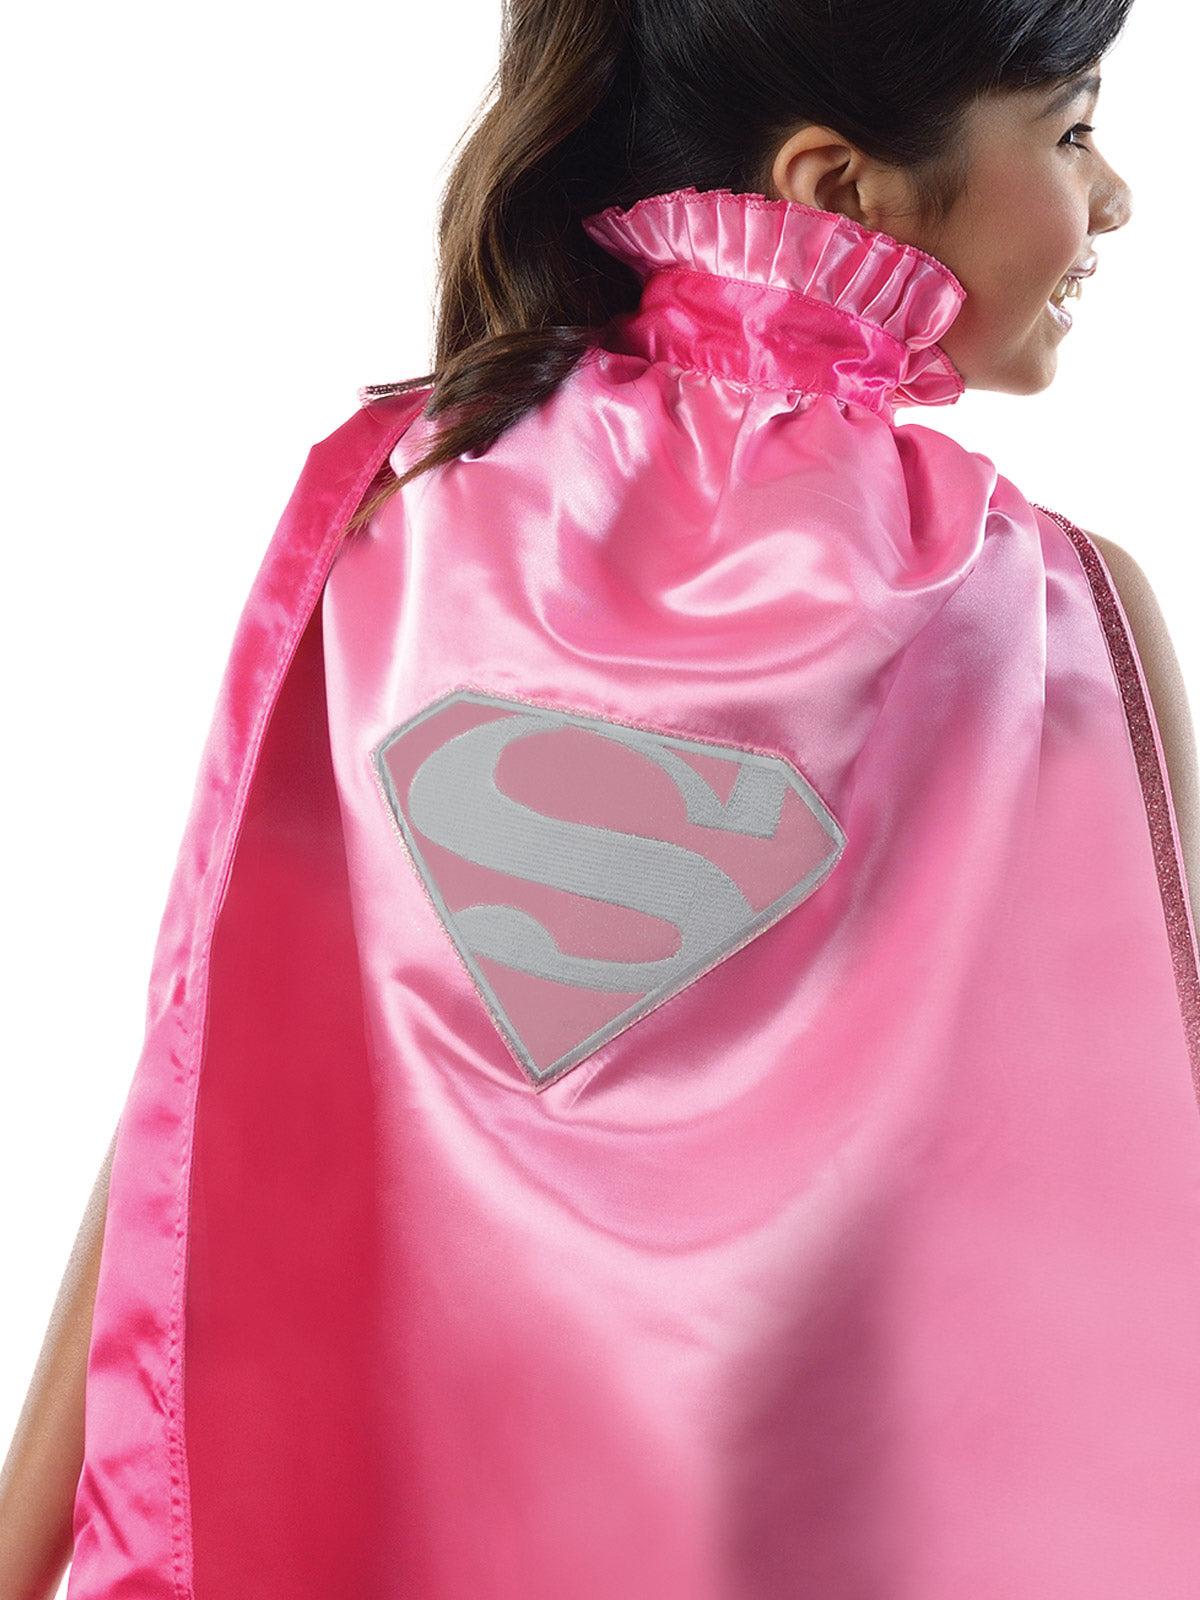 Supergirl DC Pink Cape Girls Licensed Genuine Costume Cape